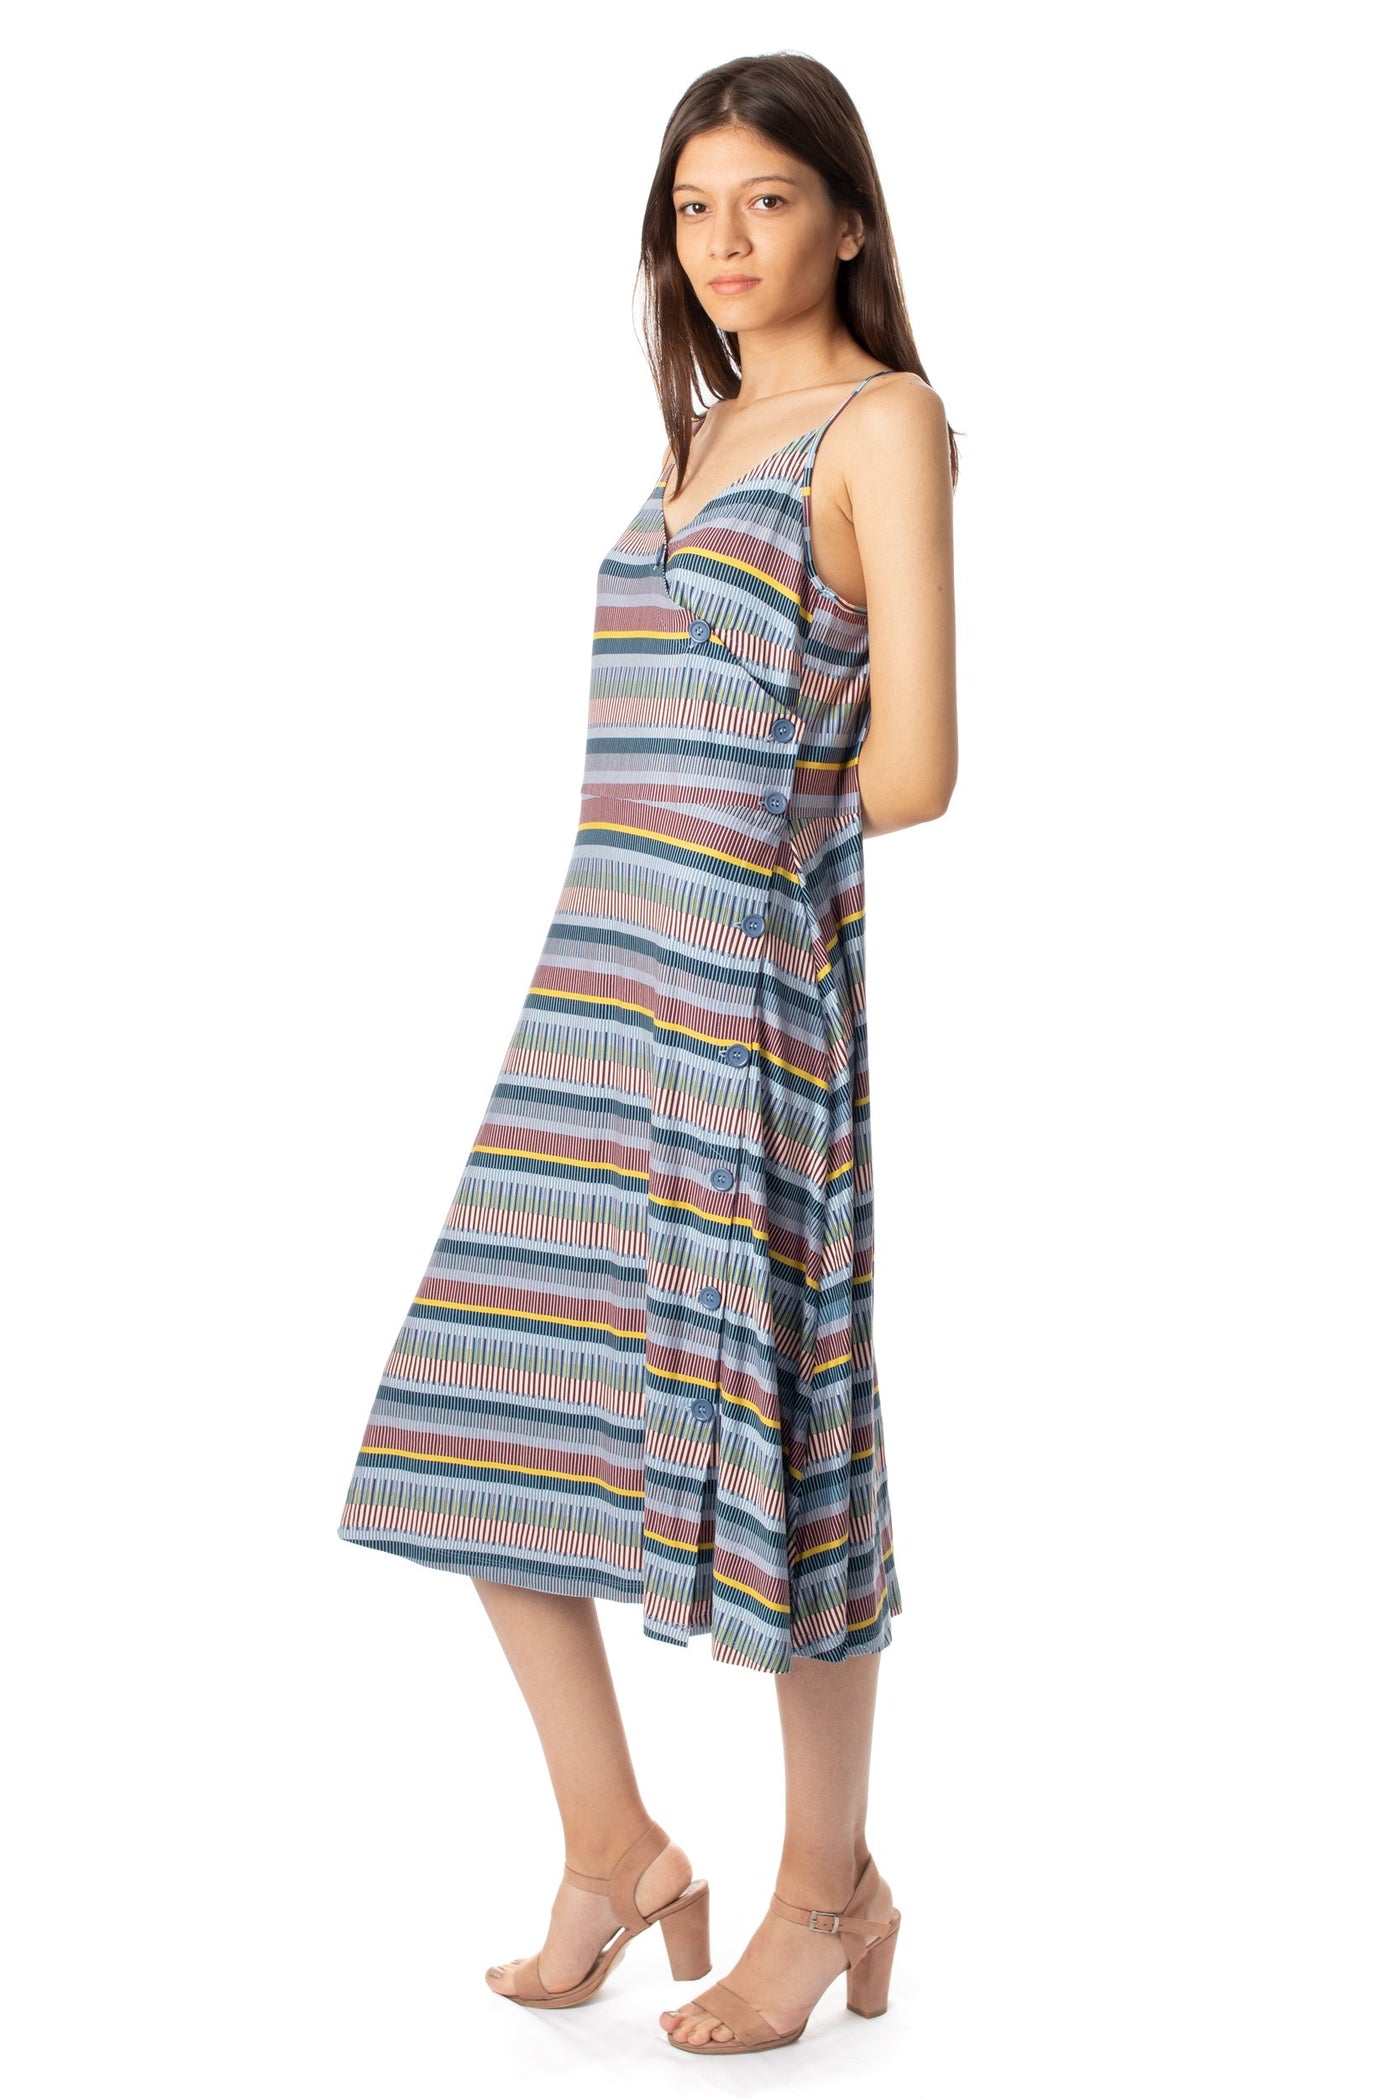 chassca printed midi stripy sun dress - Breakmood